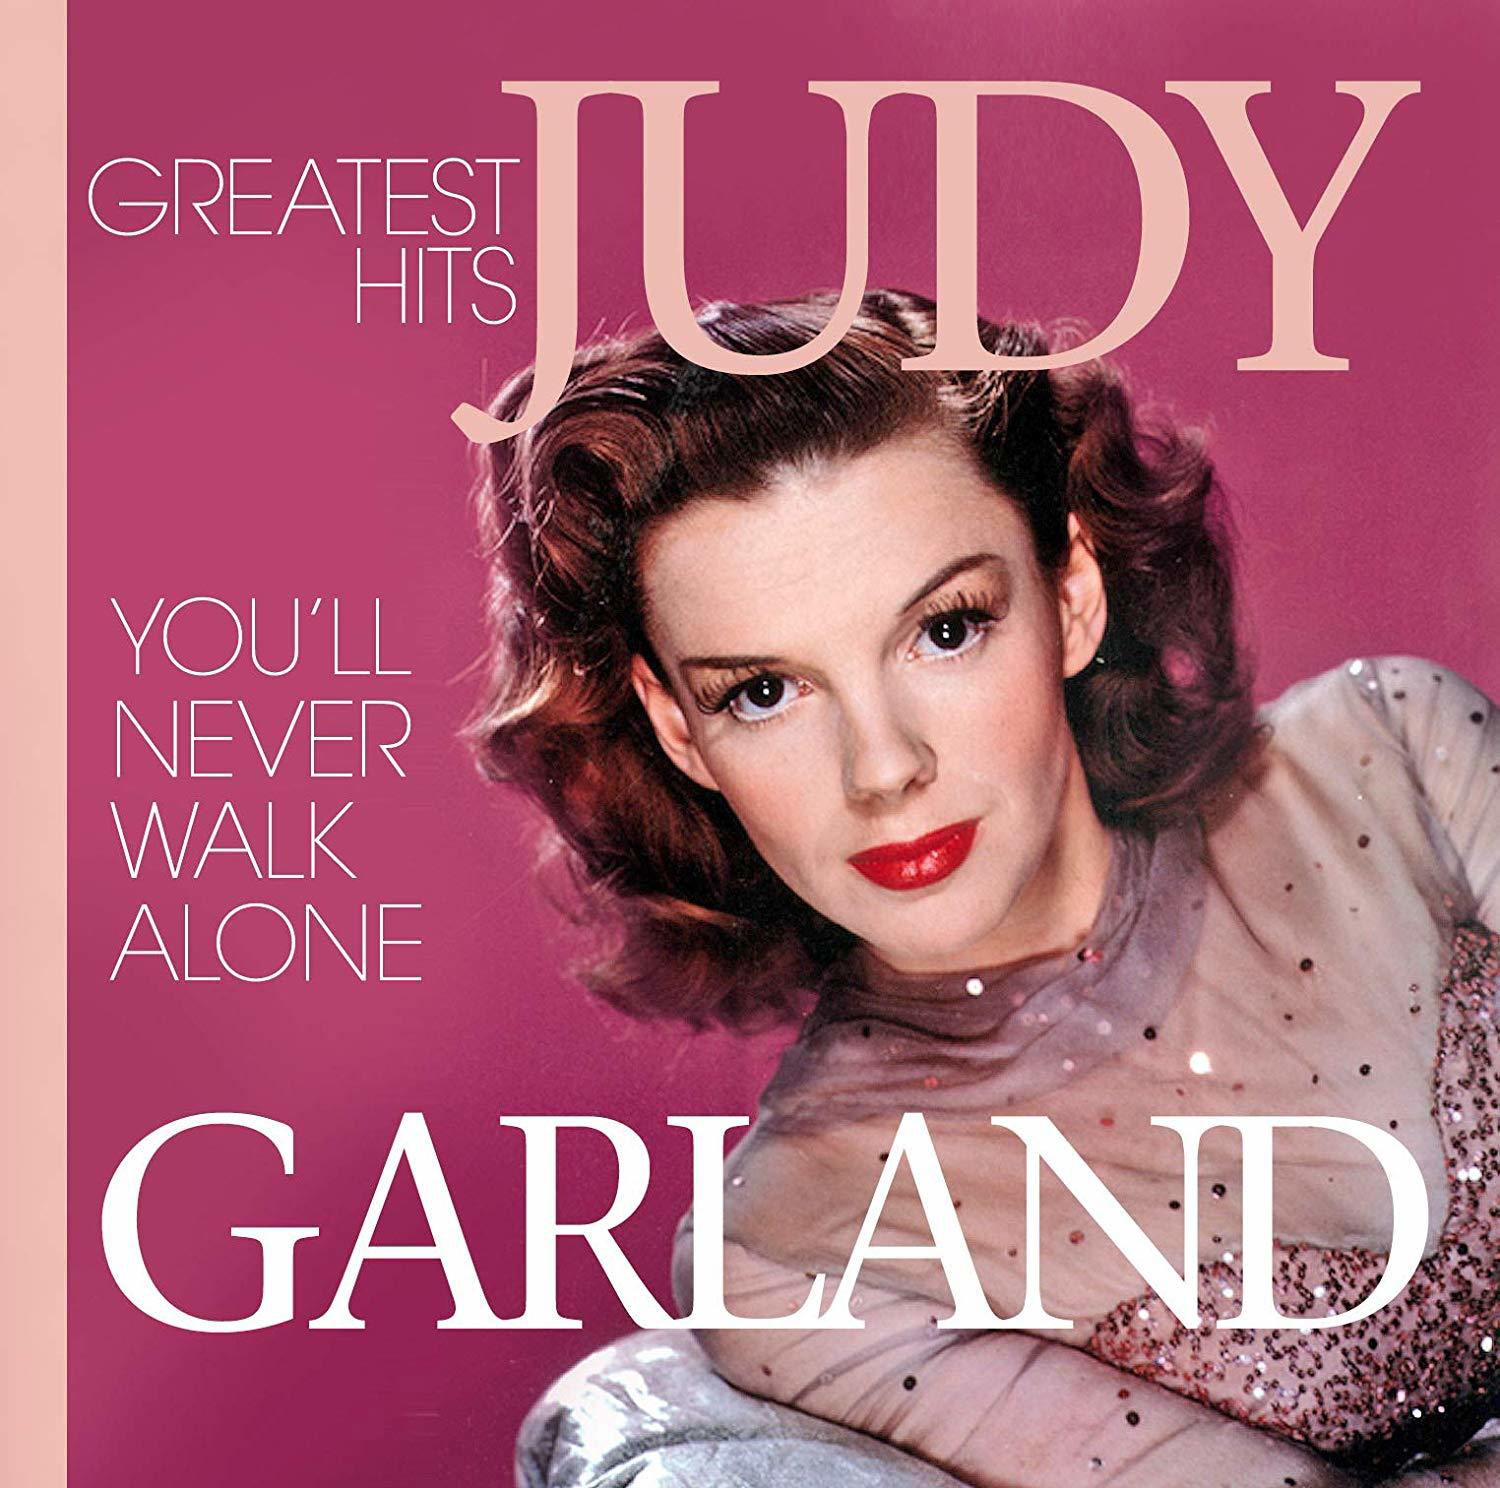 Garland Never Judy - You Alone-Greatest Hits (CD) - Walk